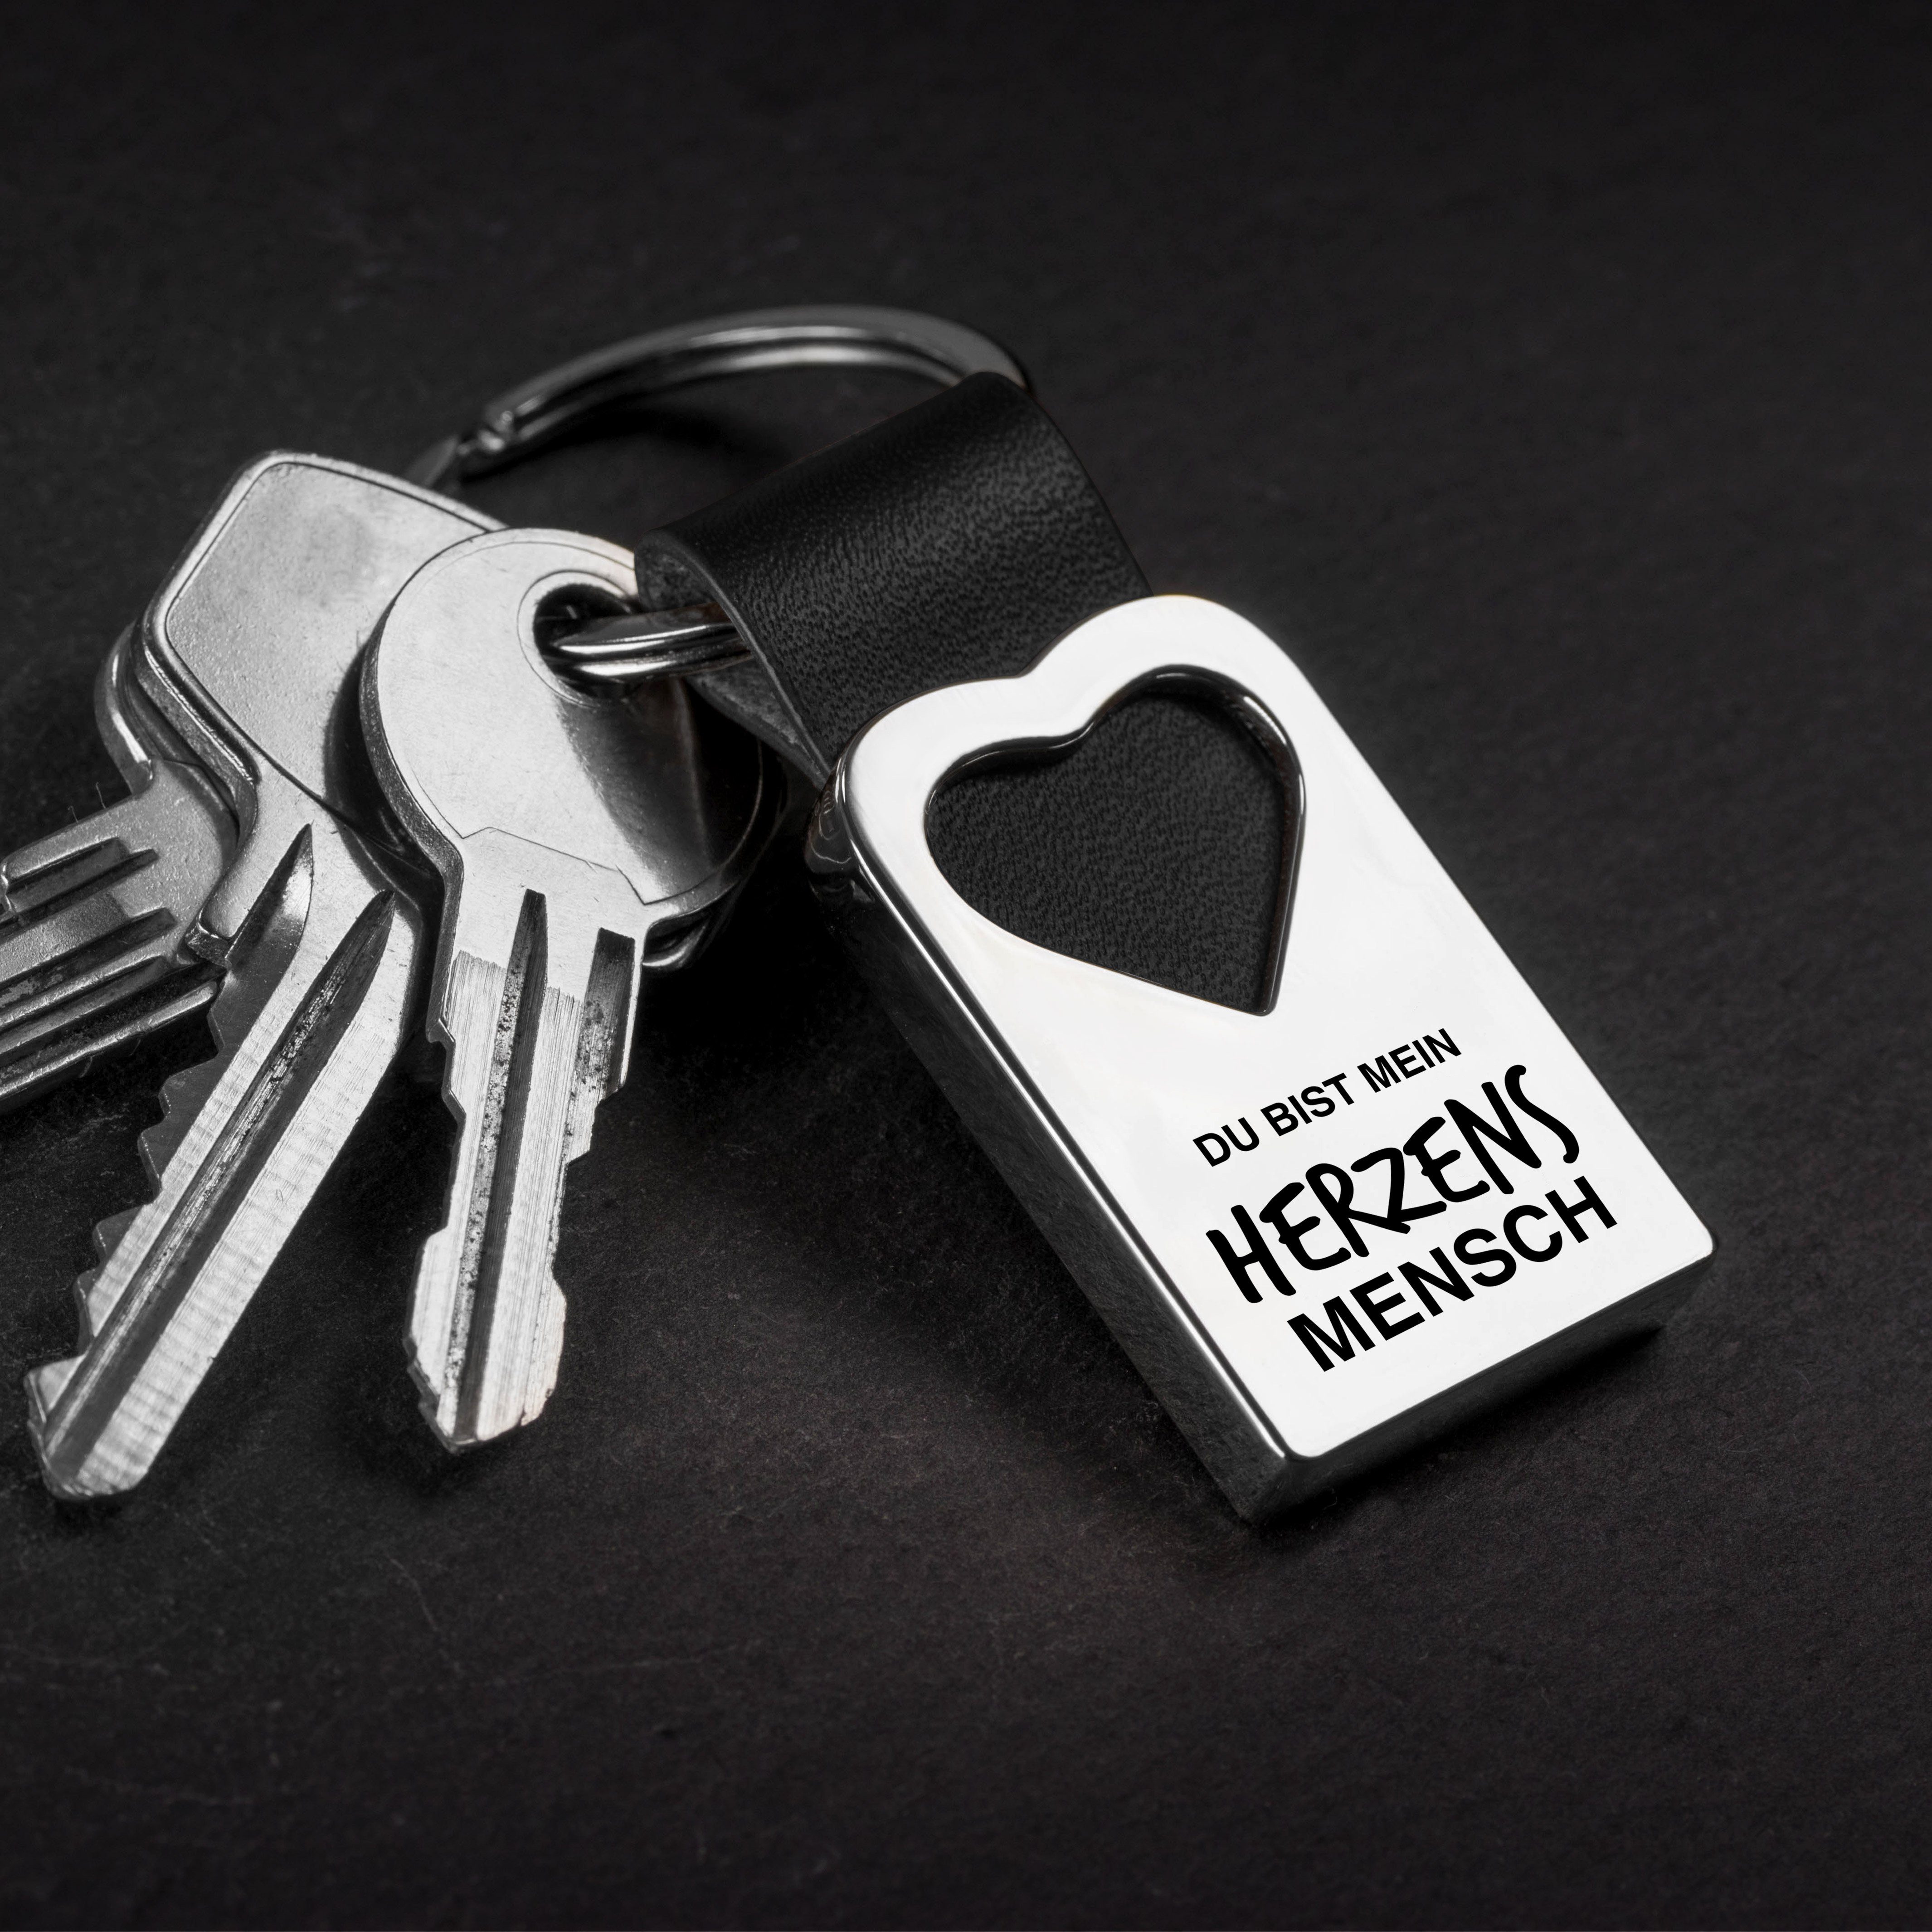 FABACH Schlüsselanhänger Herz Schlüsselanhänger Leder mit Herzensmensch Geschenk Gravur aus 